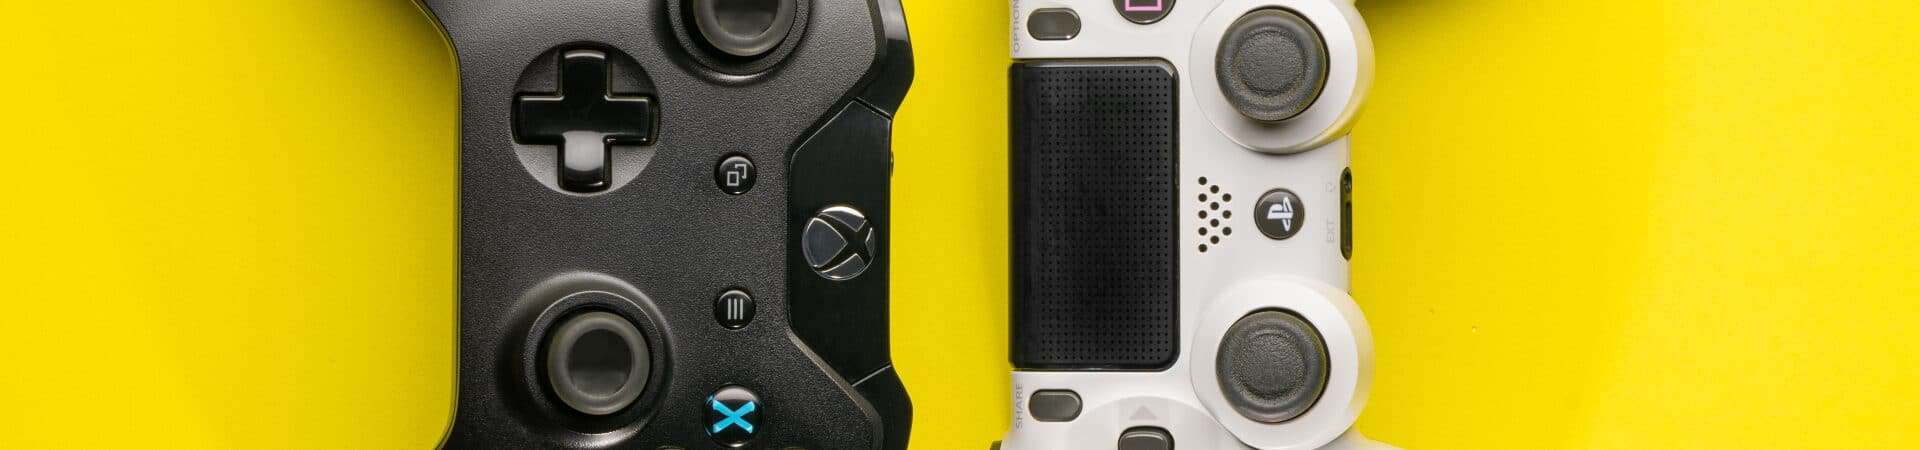 Controles do Xbox One e PlayStation 4